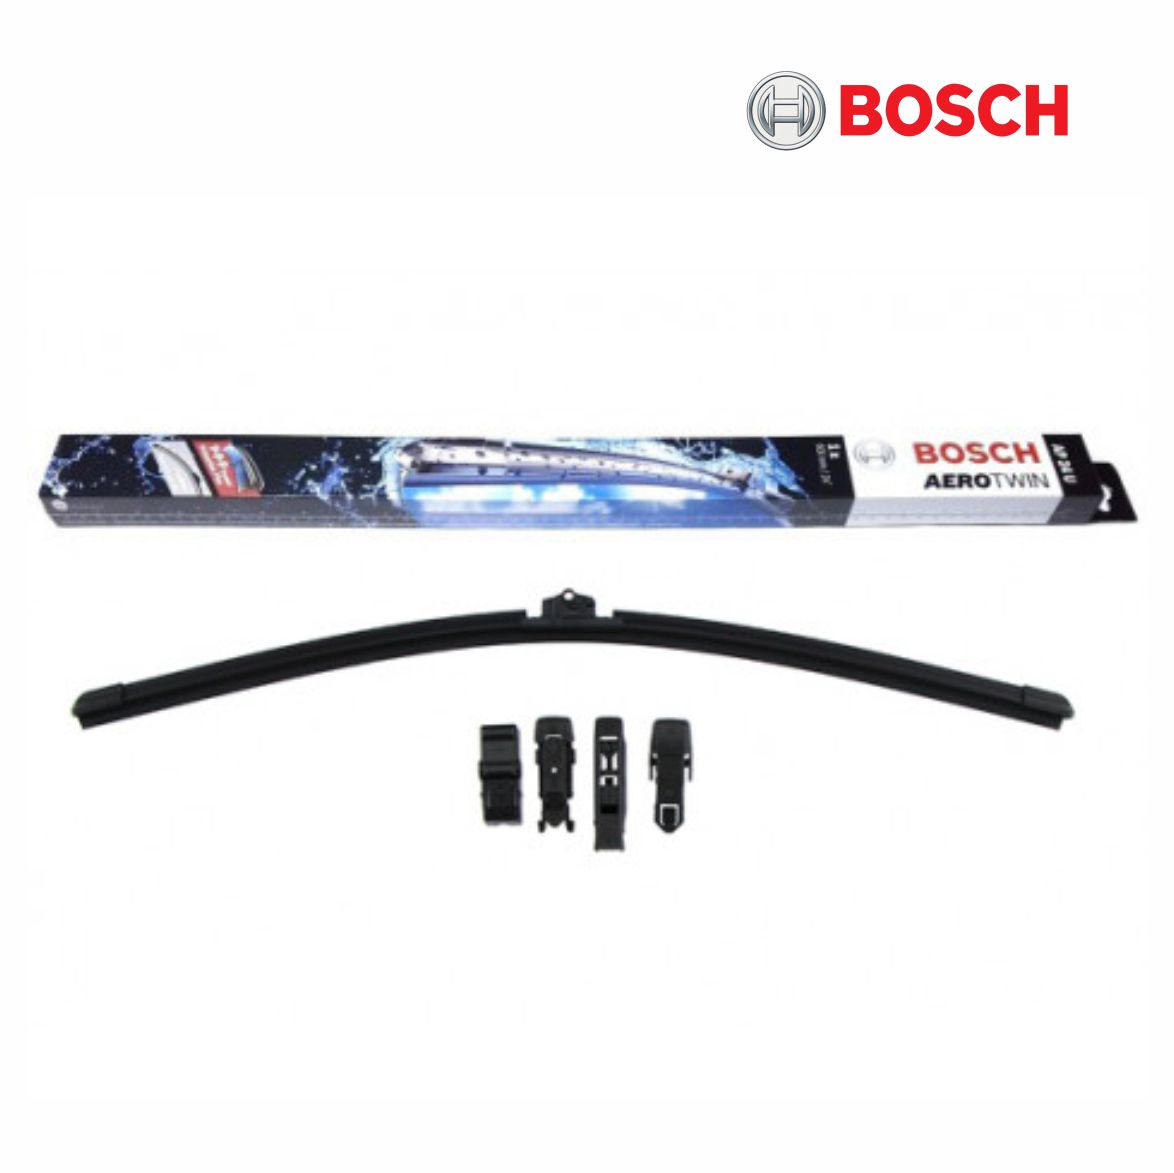 🌧️ Escobillas Bosch AeroFit Plus (Multiacoples) - AutoTodoCR